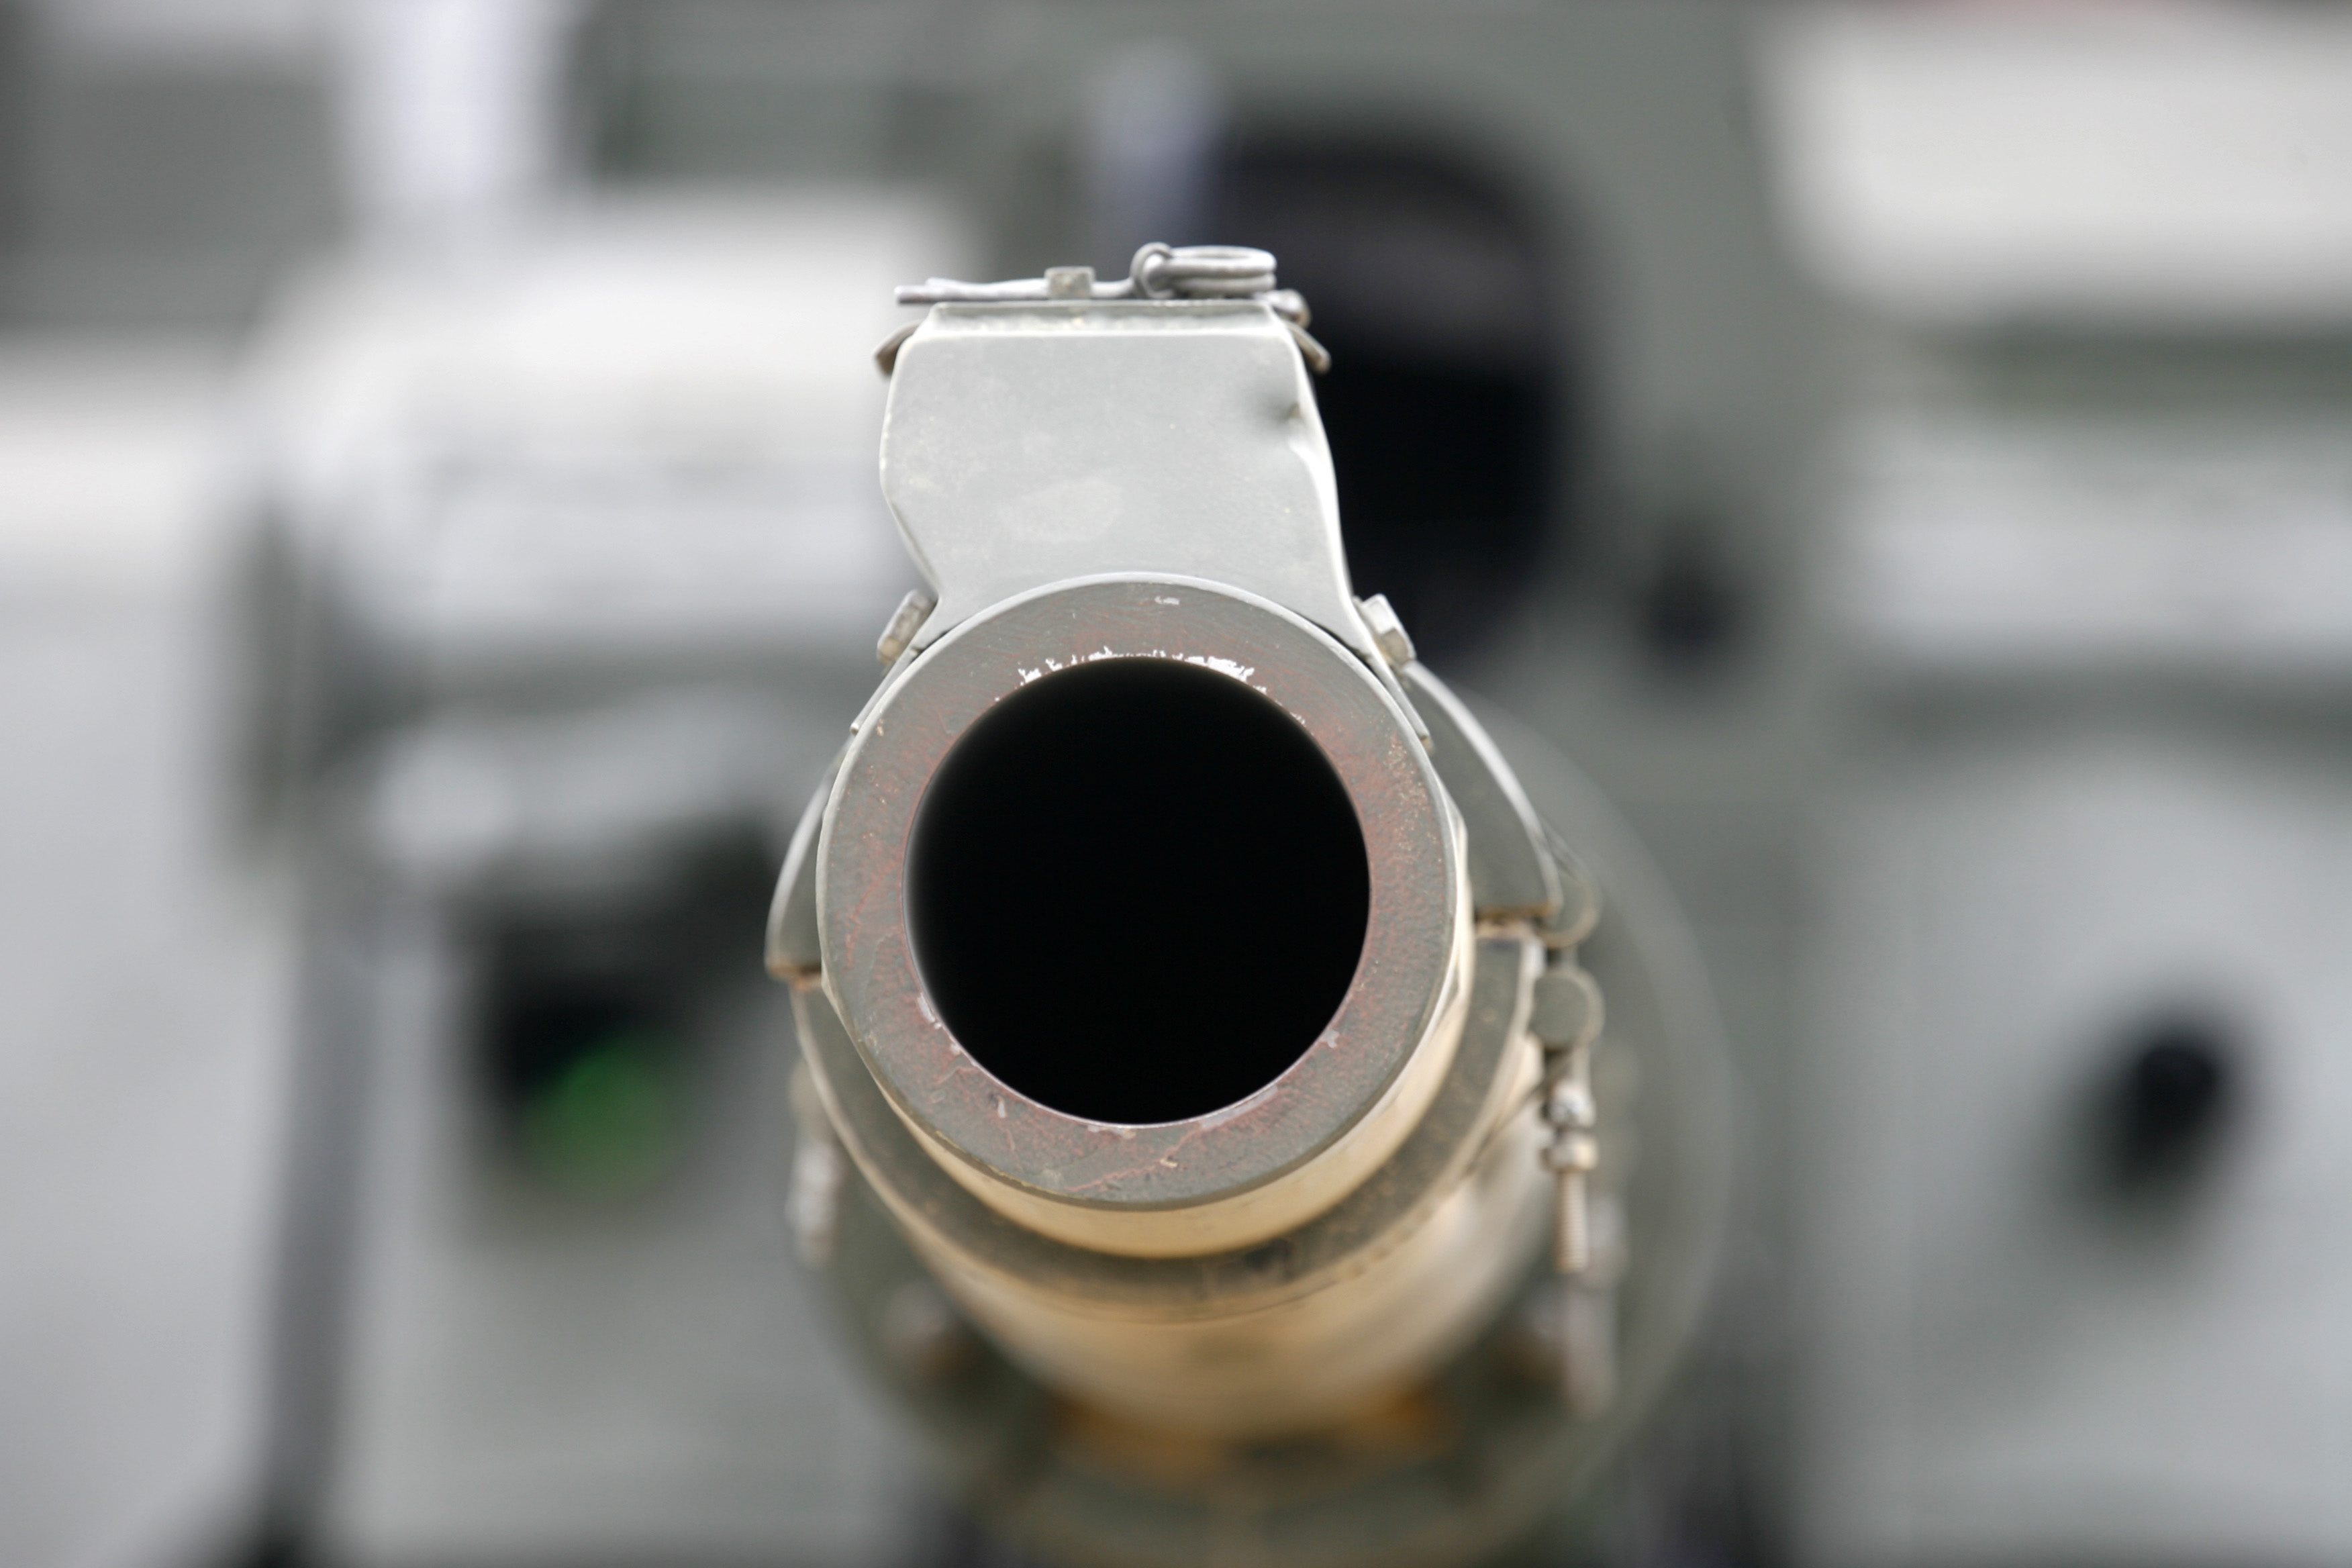 The_120mm_smooth_bore_tank_gun,_looking_down_the_barrel._MOD_45146594.jpg